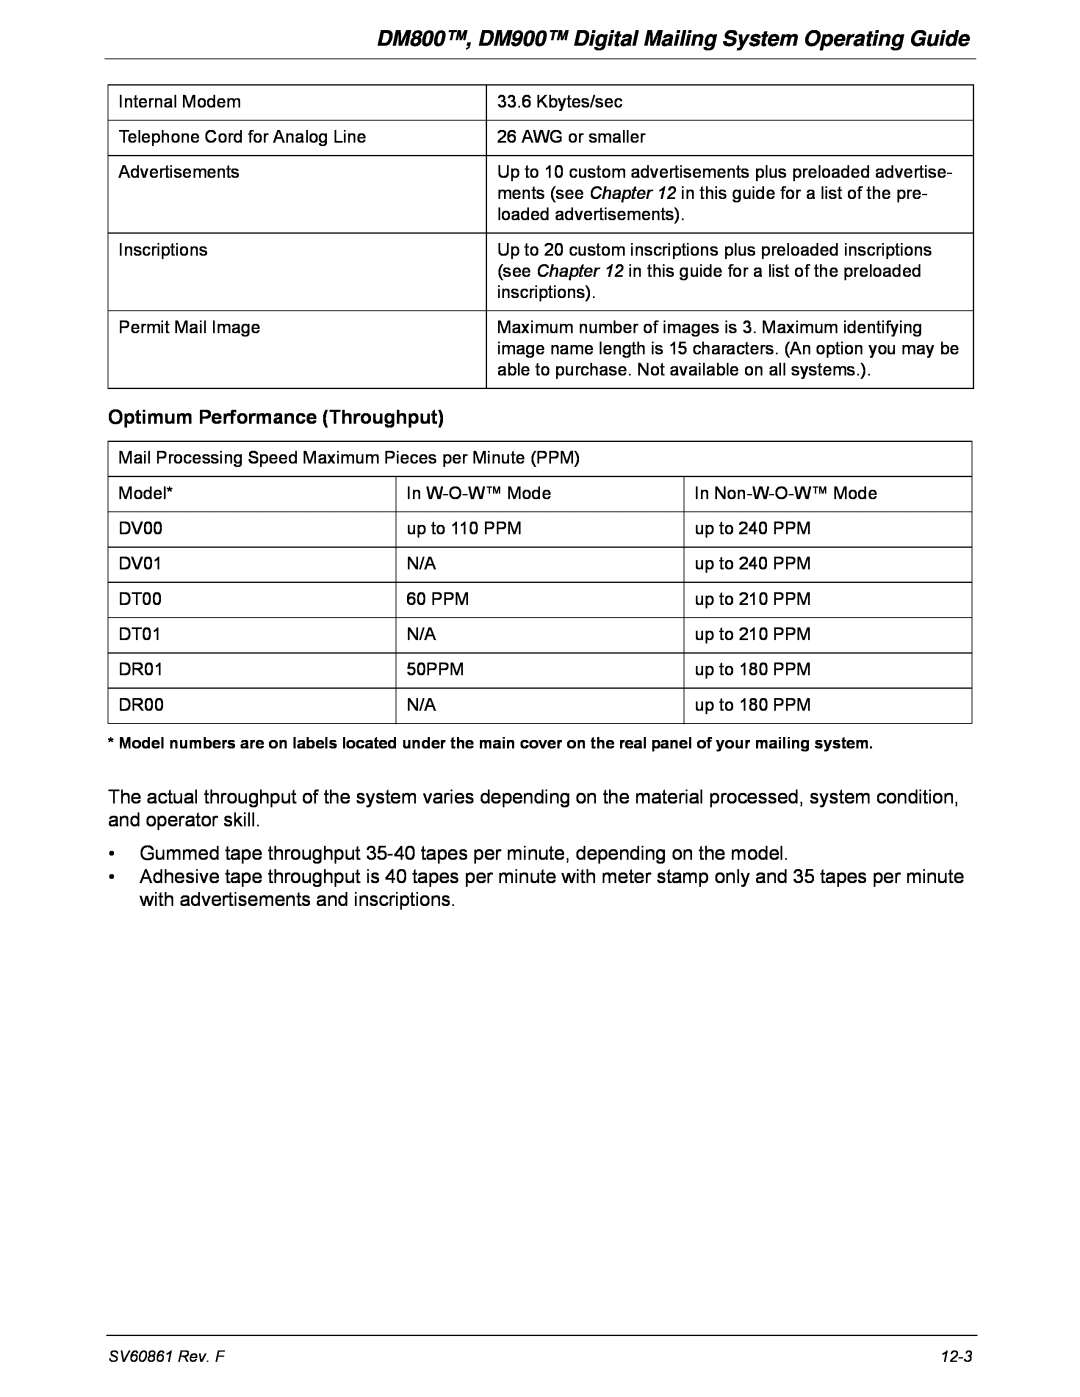 Pitney Bowes manual DM800, DM900 Digital Mailing System Operating Guide, Optimum Performance Throughput 